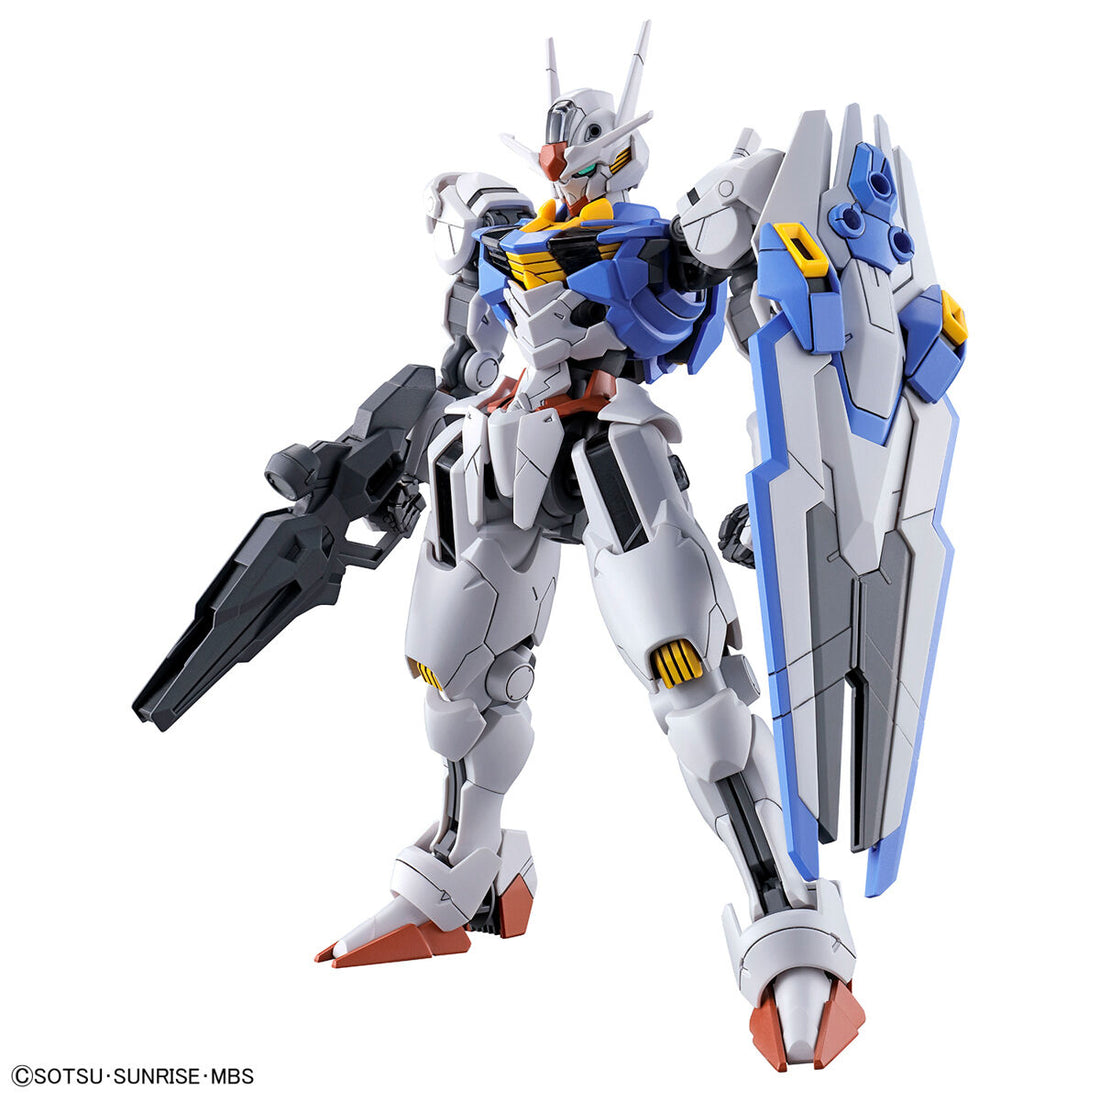 HG 1/144 Gundam Aerial - Glacier Hobbies - Bandai